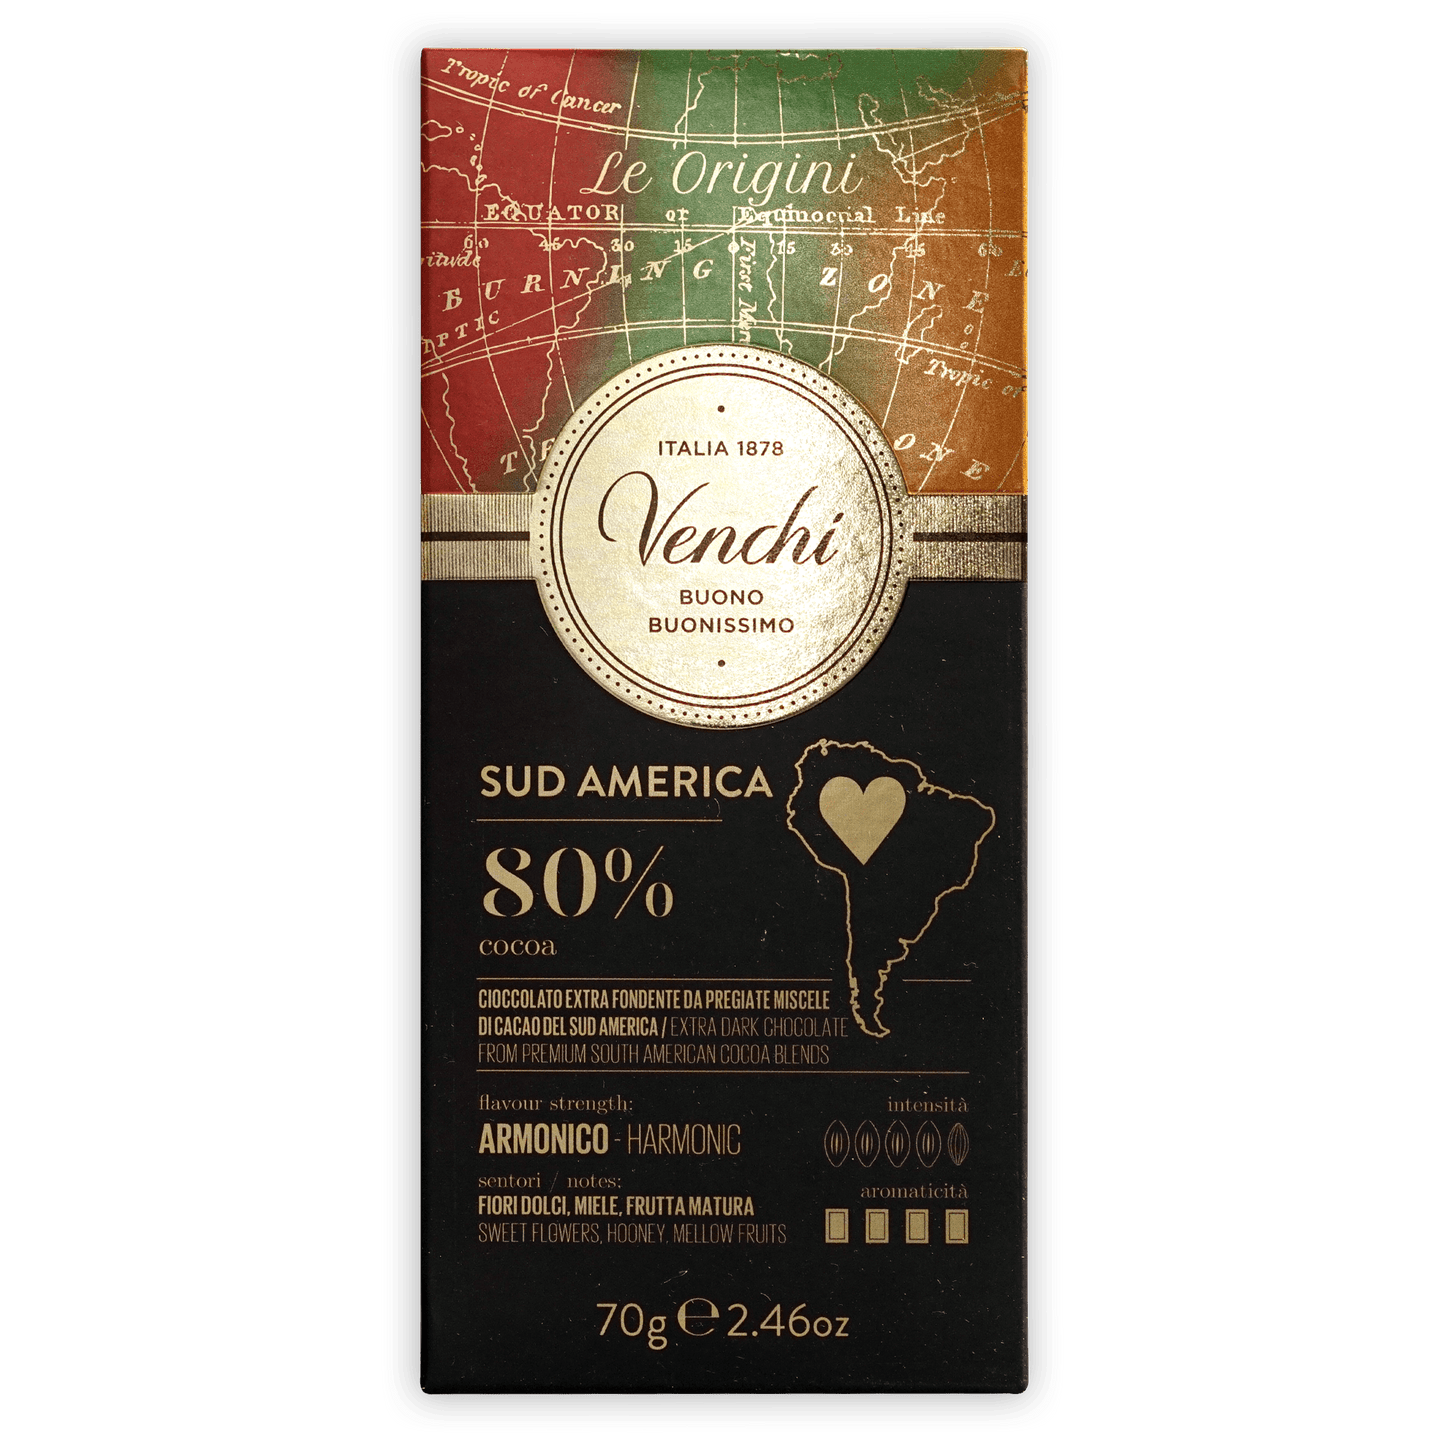 Venchi Sud (South) America Chocolate 80%